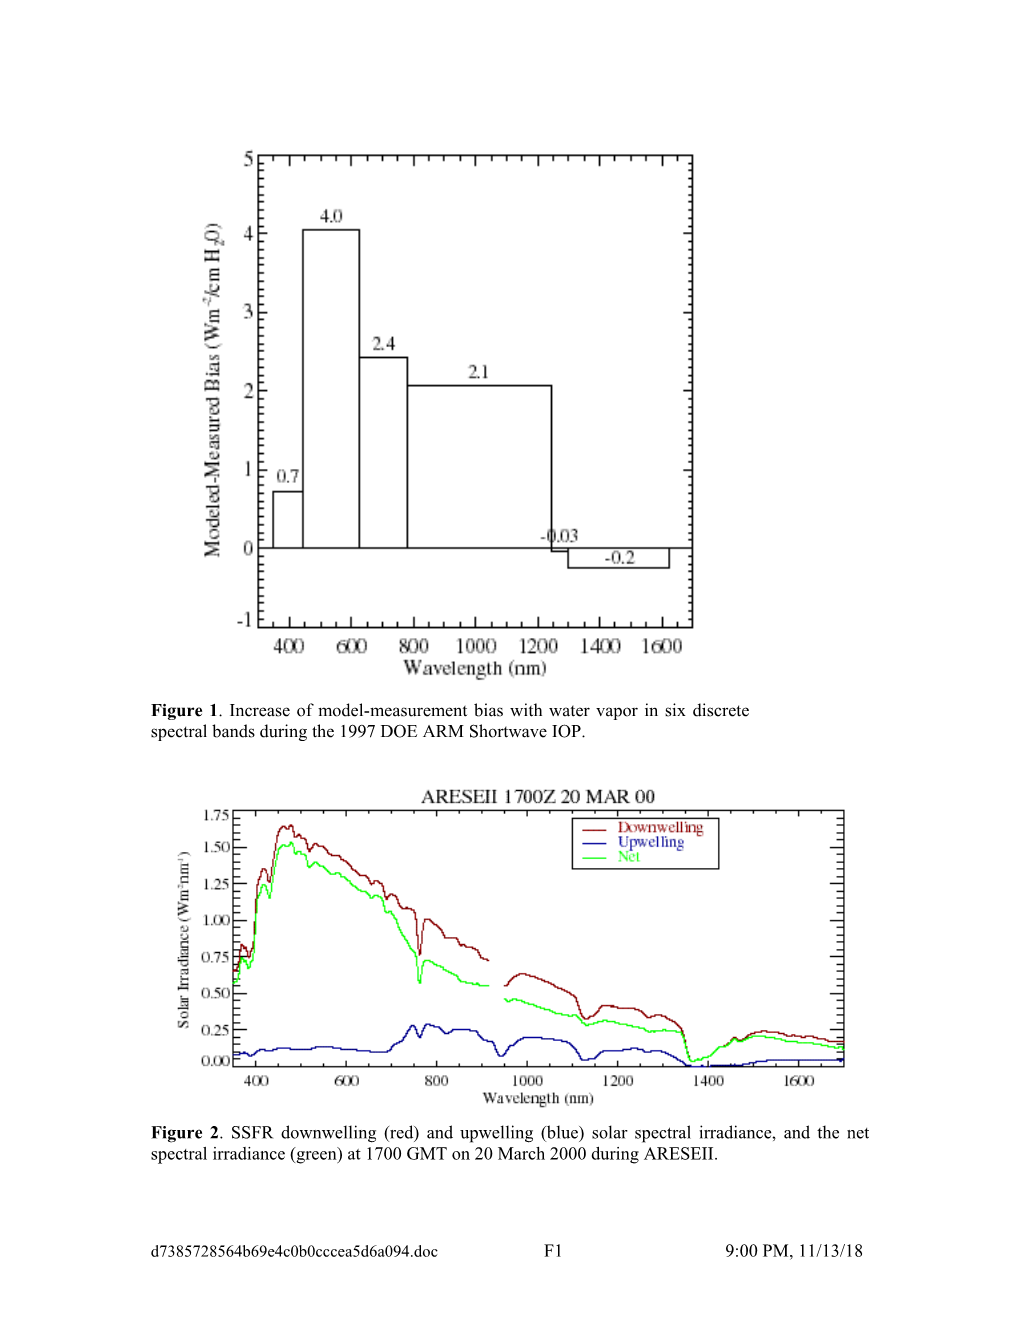 Figure 1. Increase of Model-Measurement Bias with Water Vapor in Six Discrete Spectral